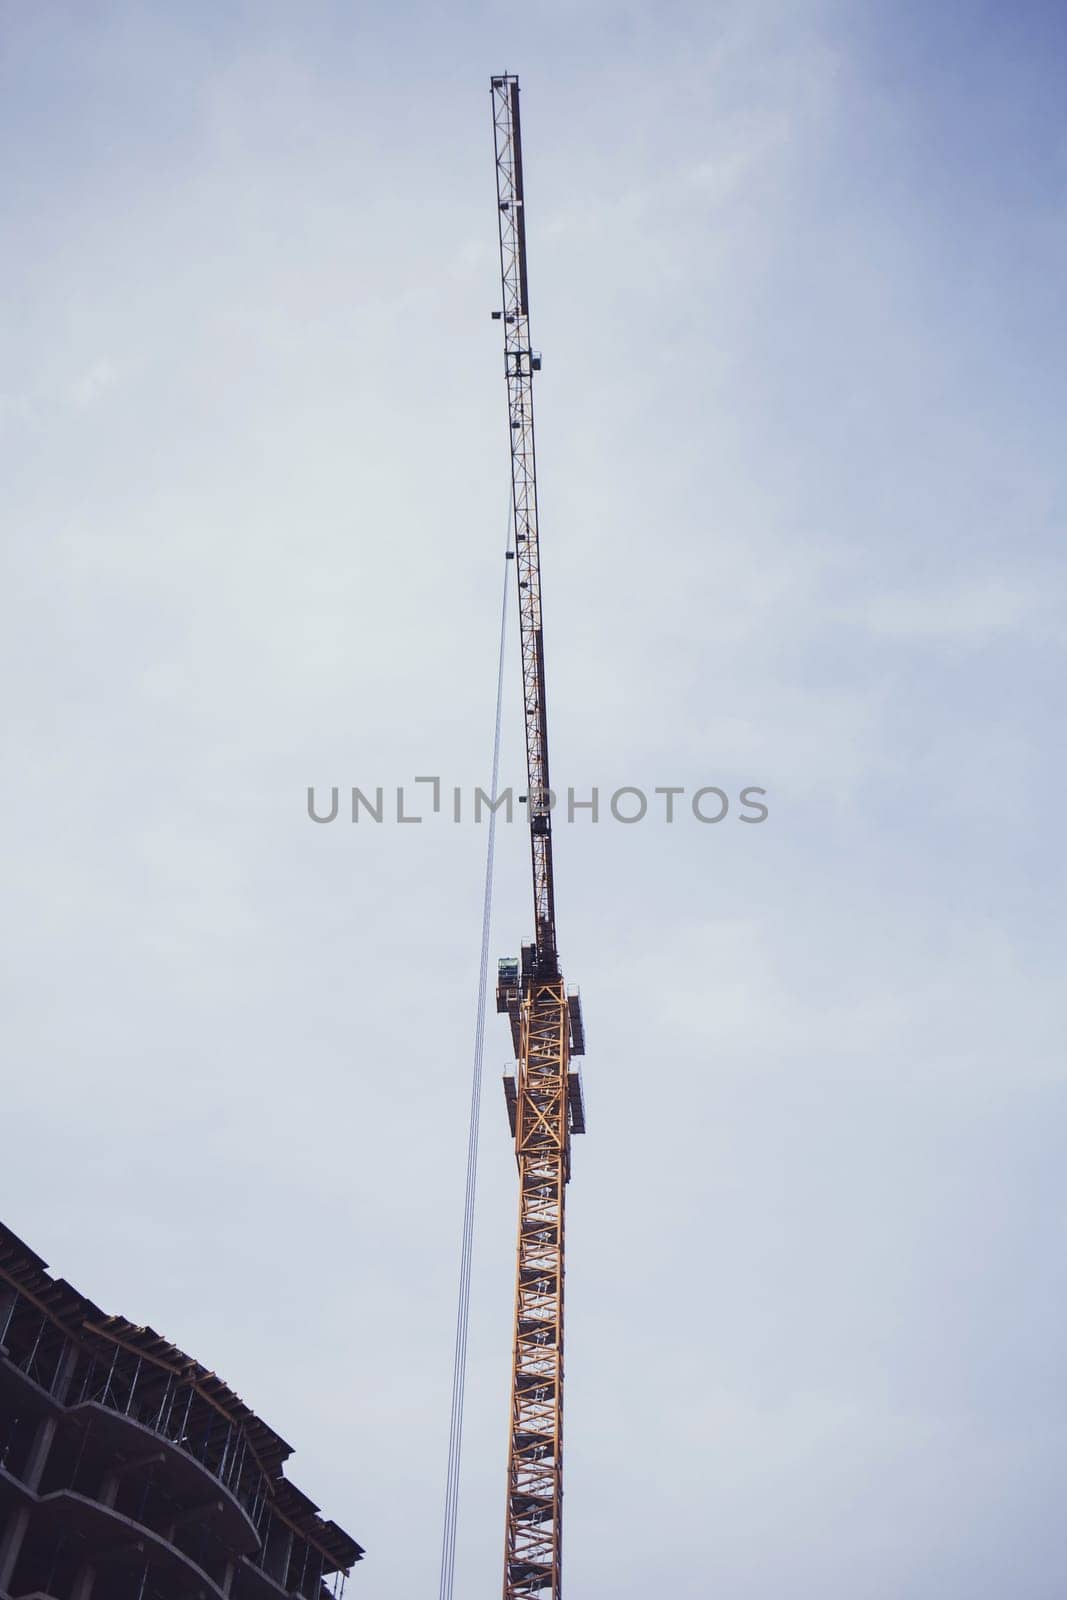 tower crane by Ladouski